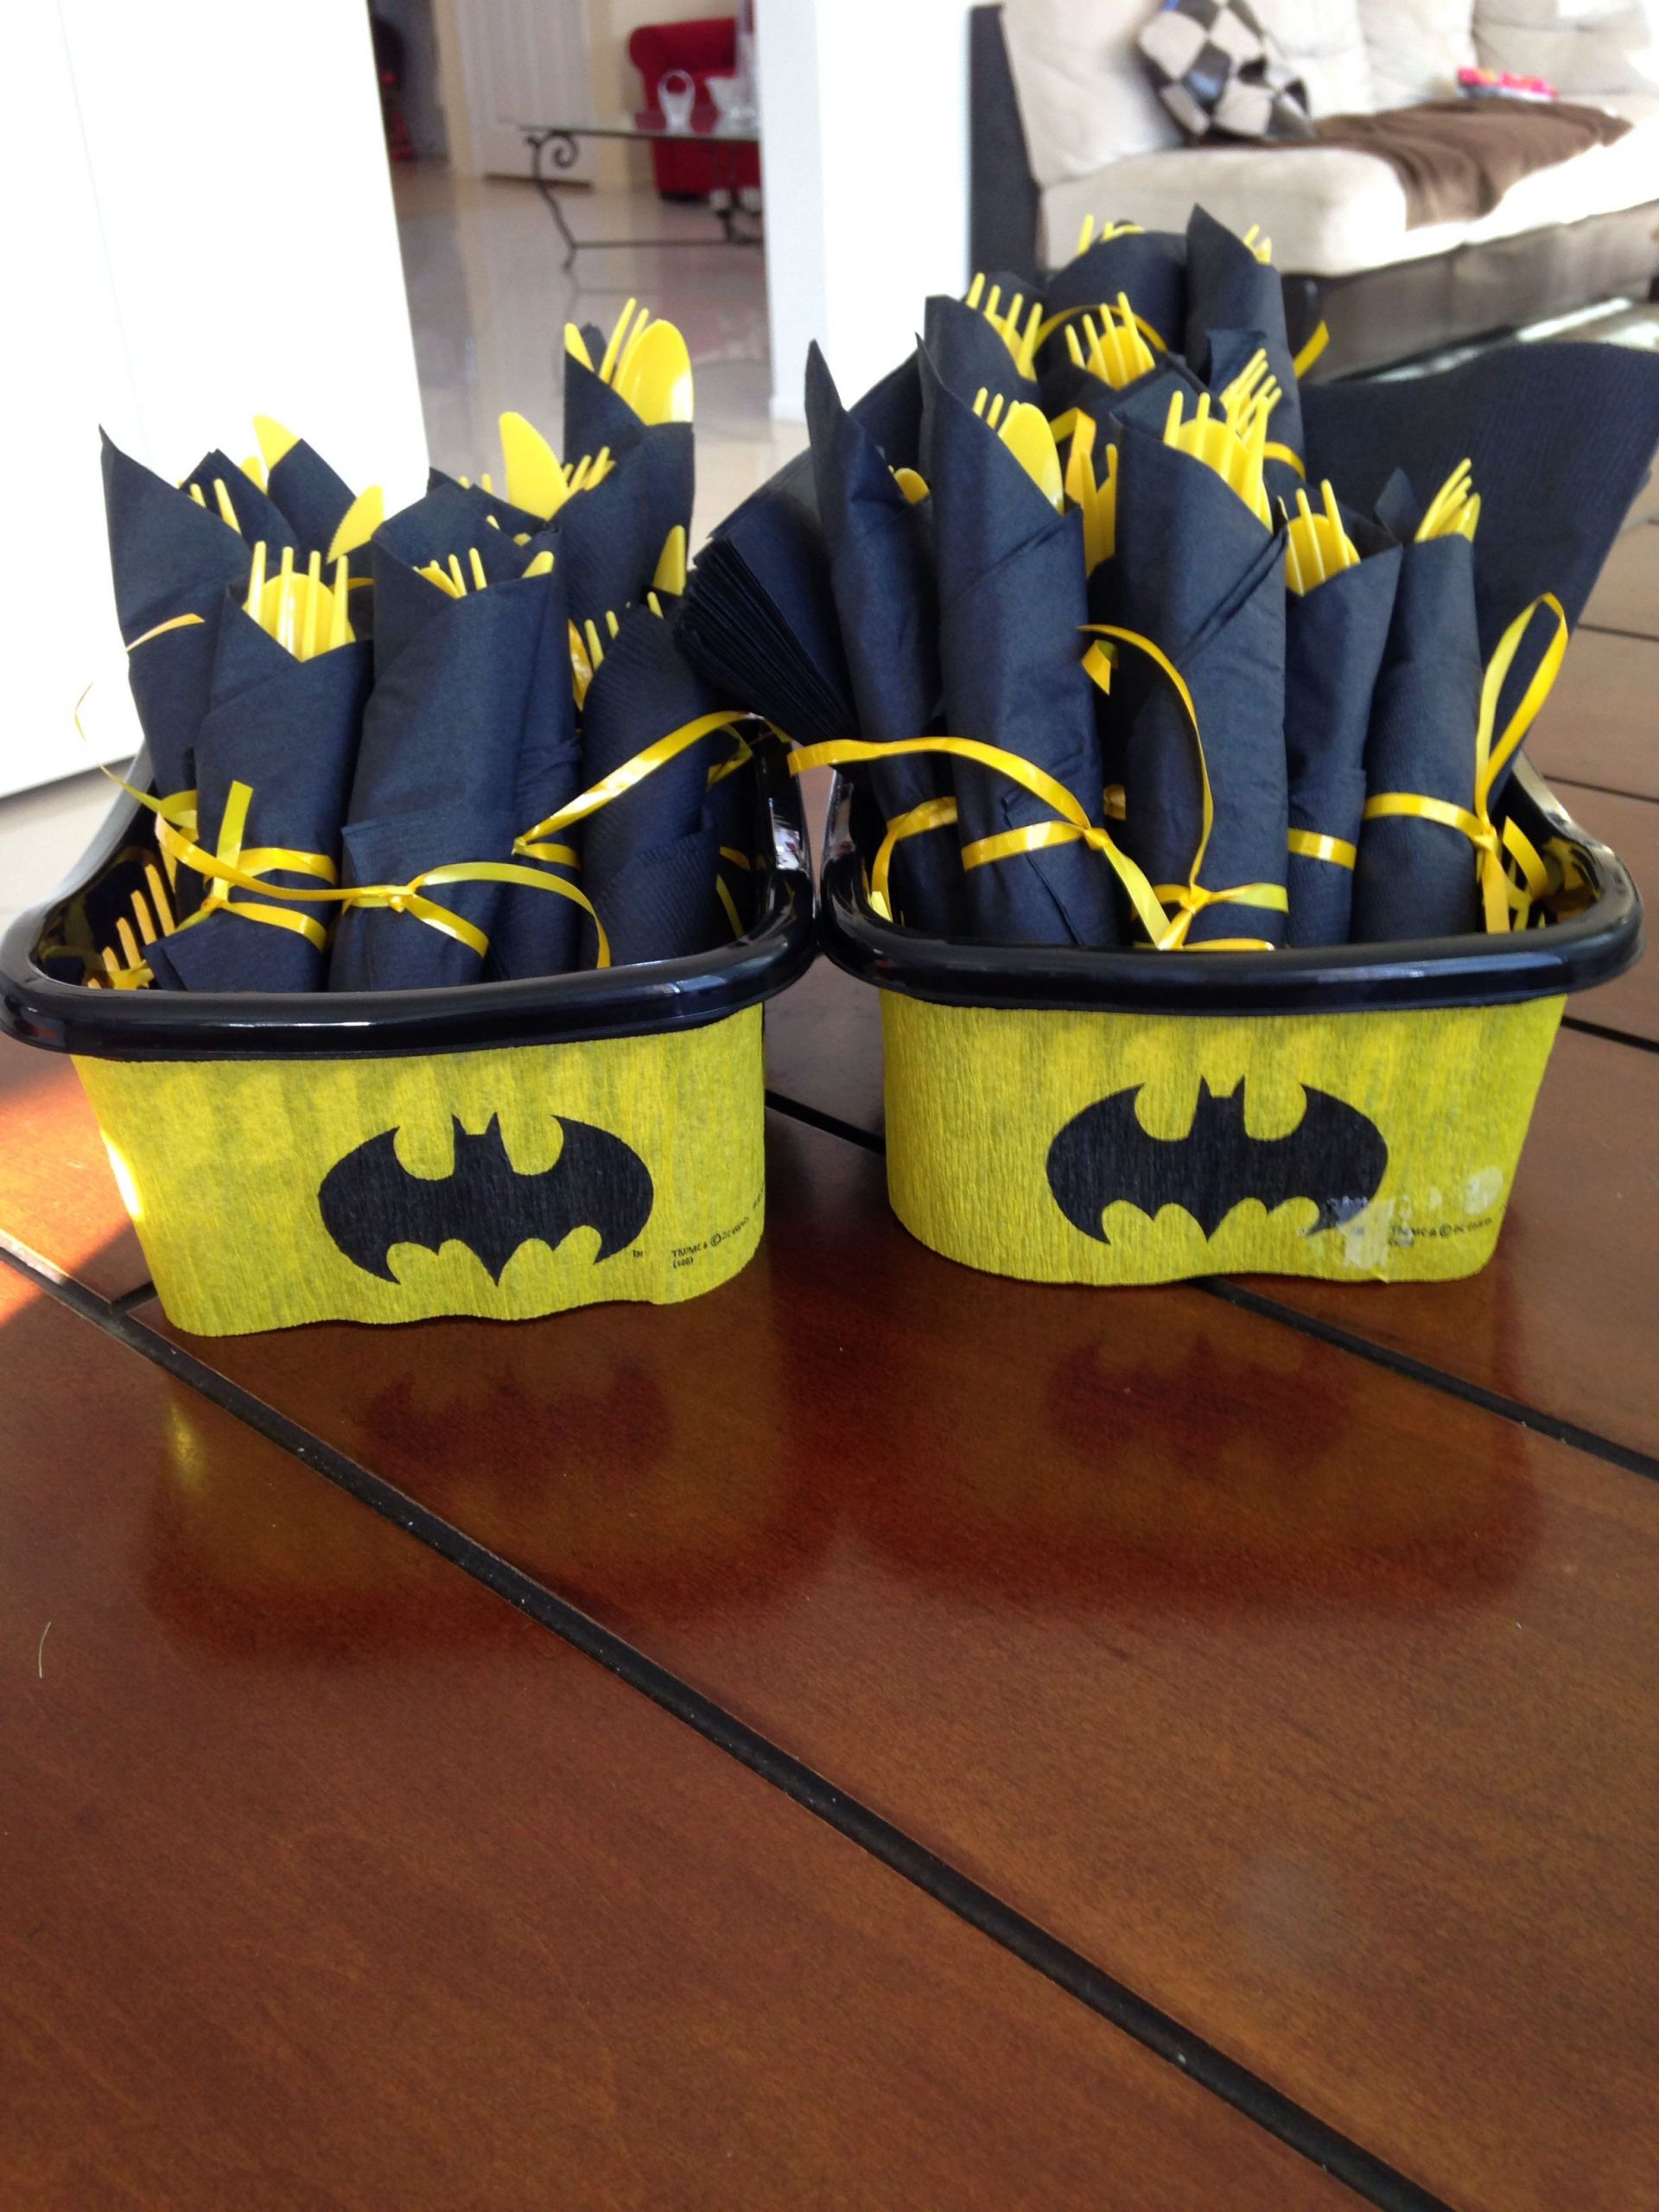 Batgirl Birthday Party Supplies
 Love this idea for any superhero birthday party batman